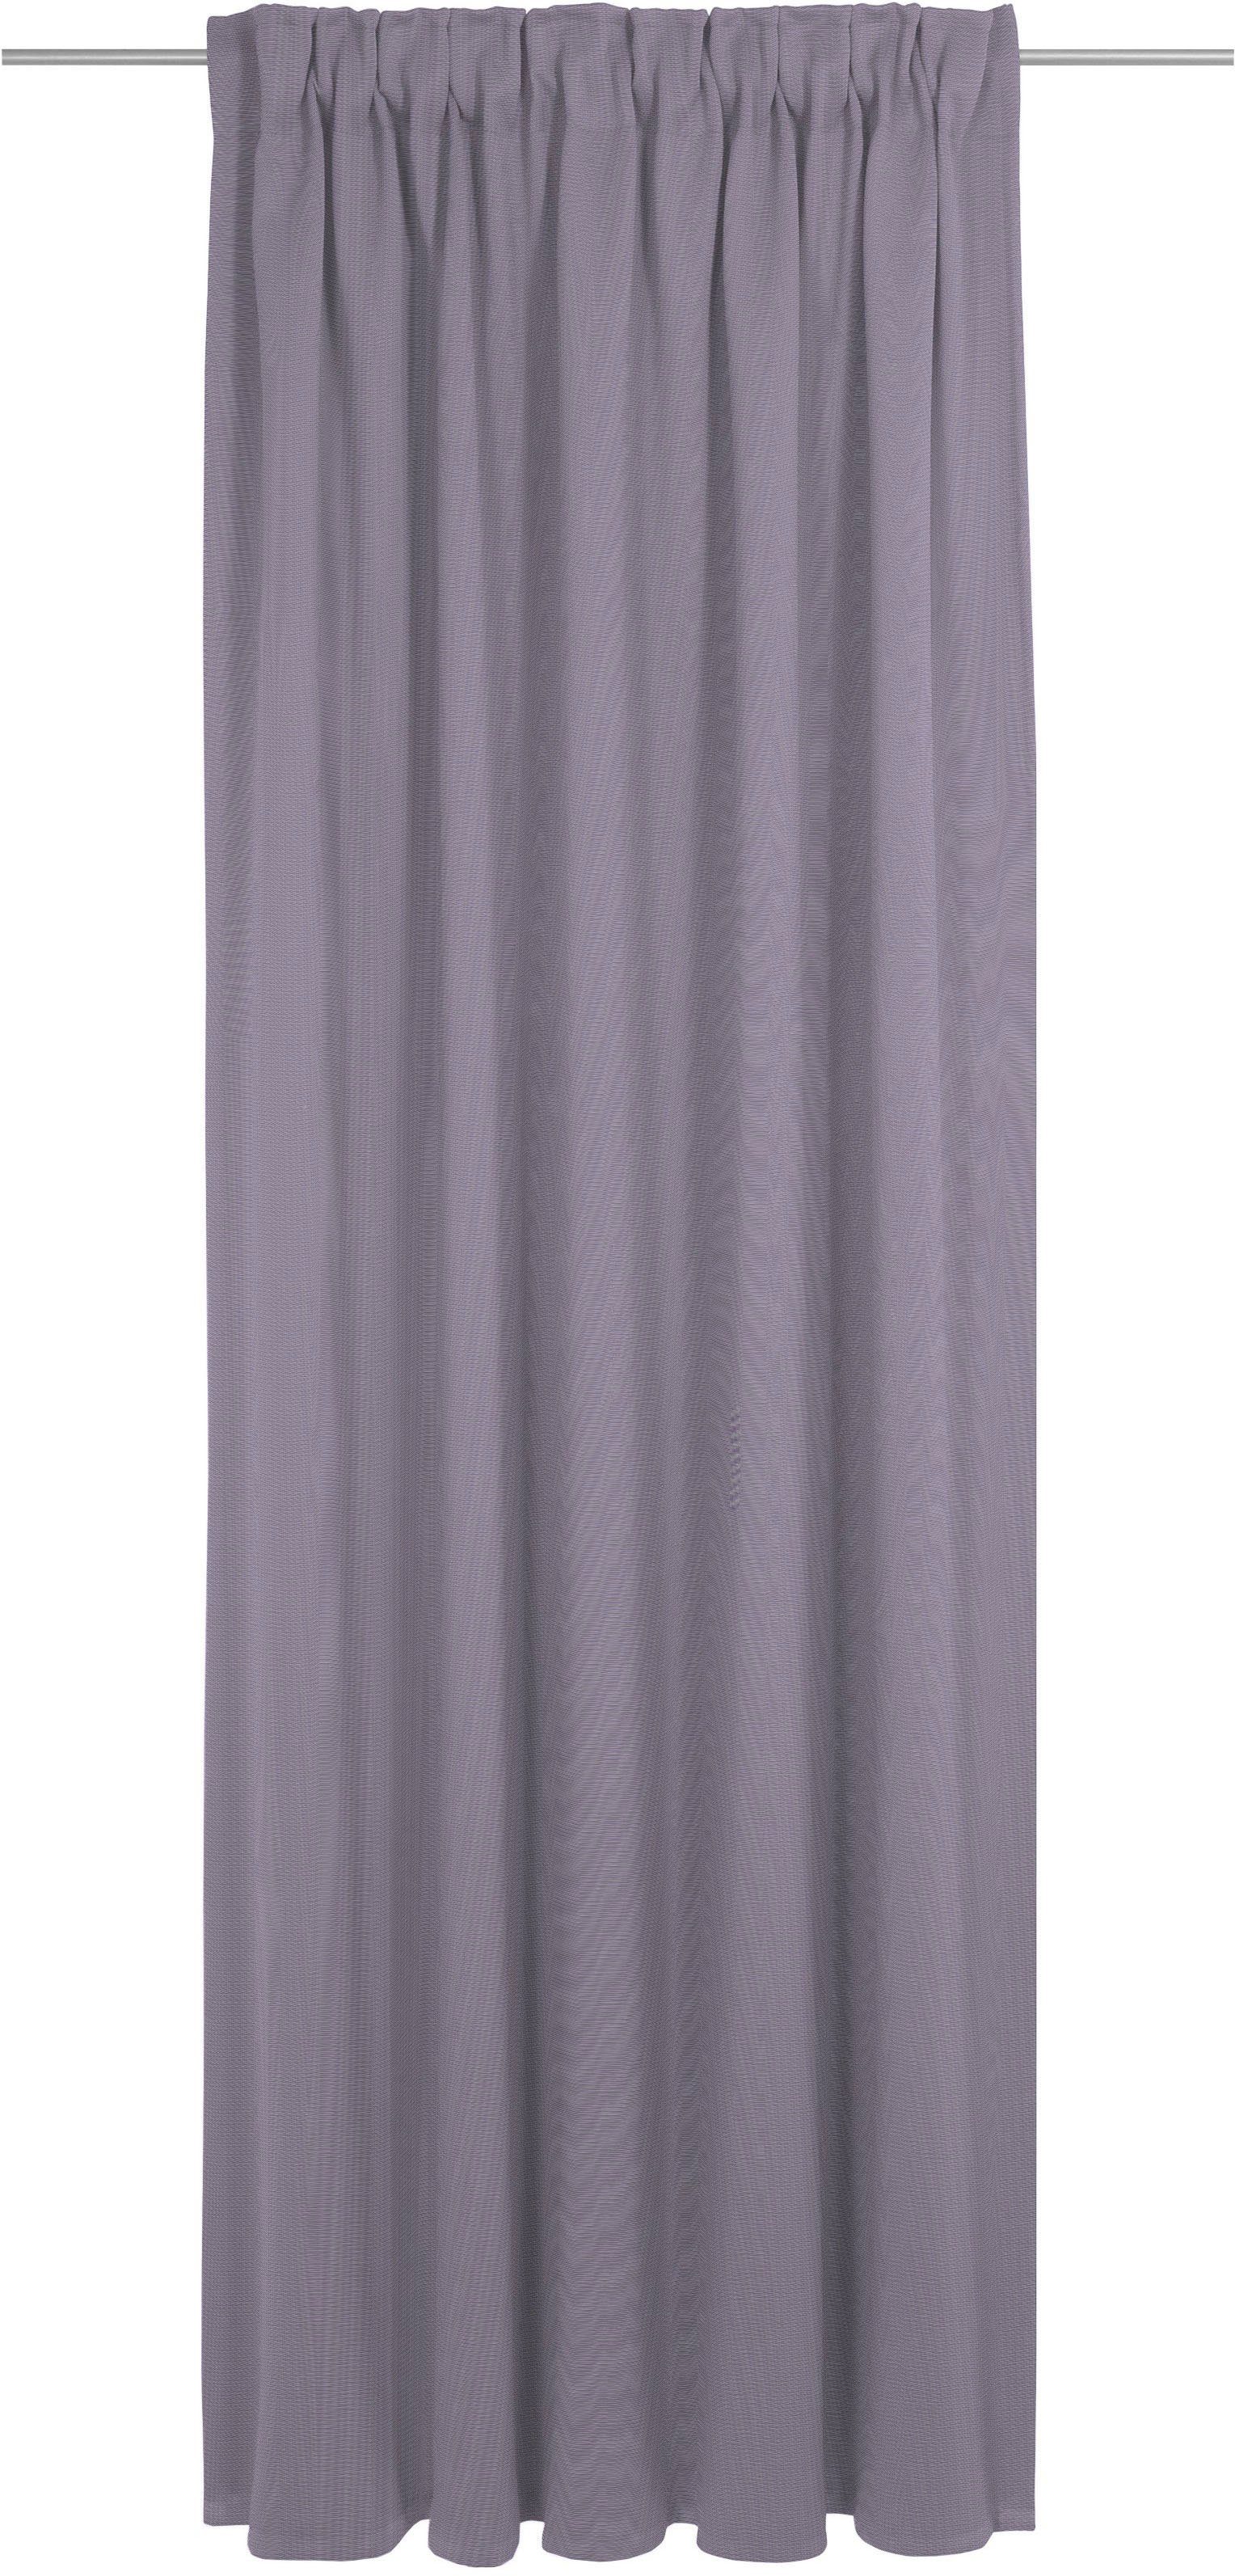 Vorhang Uni blickdicht, Multifunktionsband lila (1 St), Collection Maß light, Wirth, nach